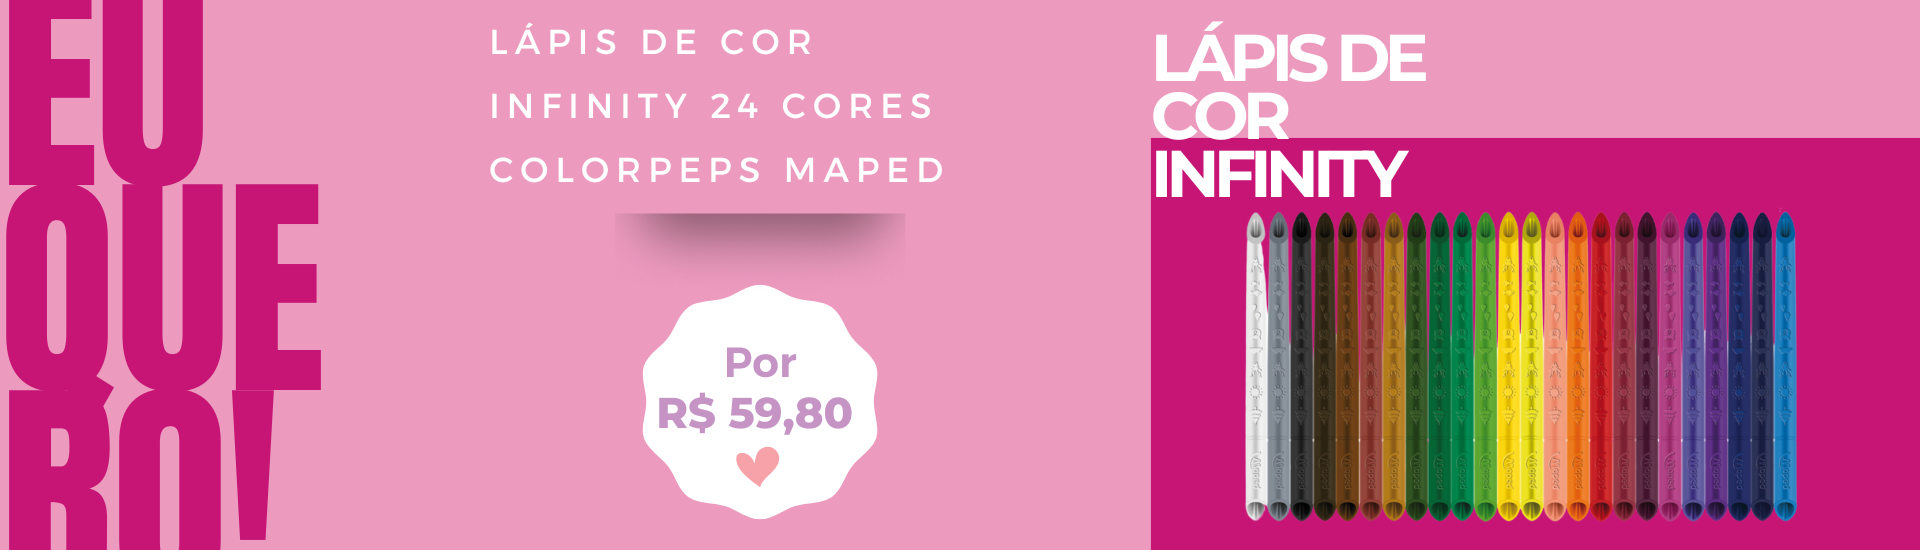 Lápis de Cor Infinity 24 Cores ColorPeps Maped